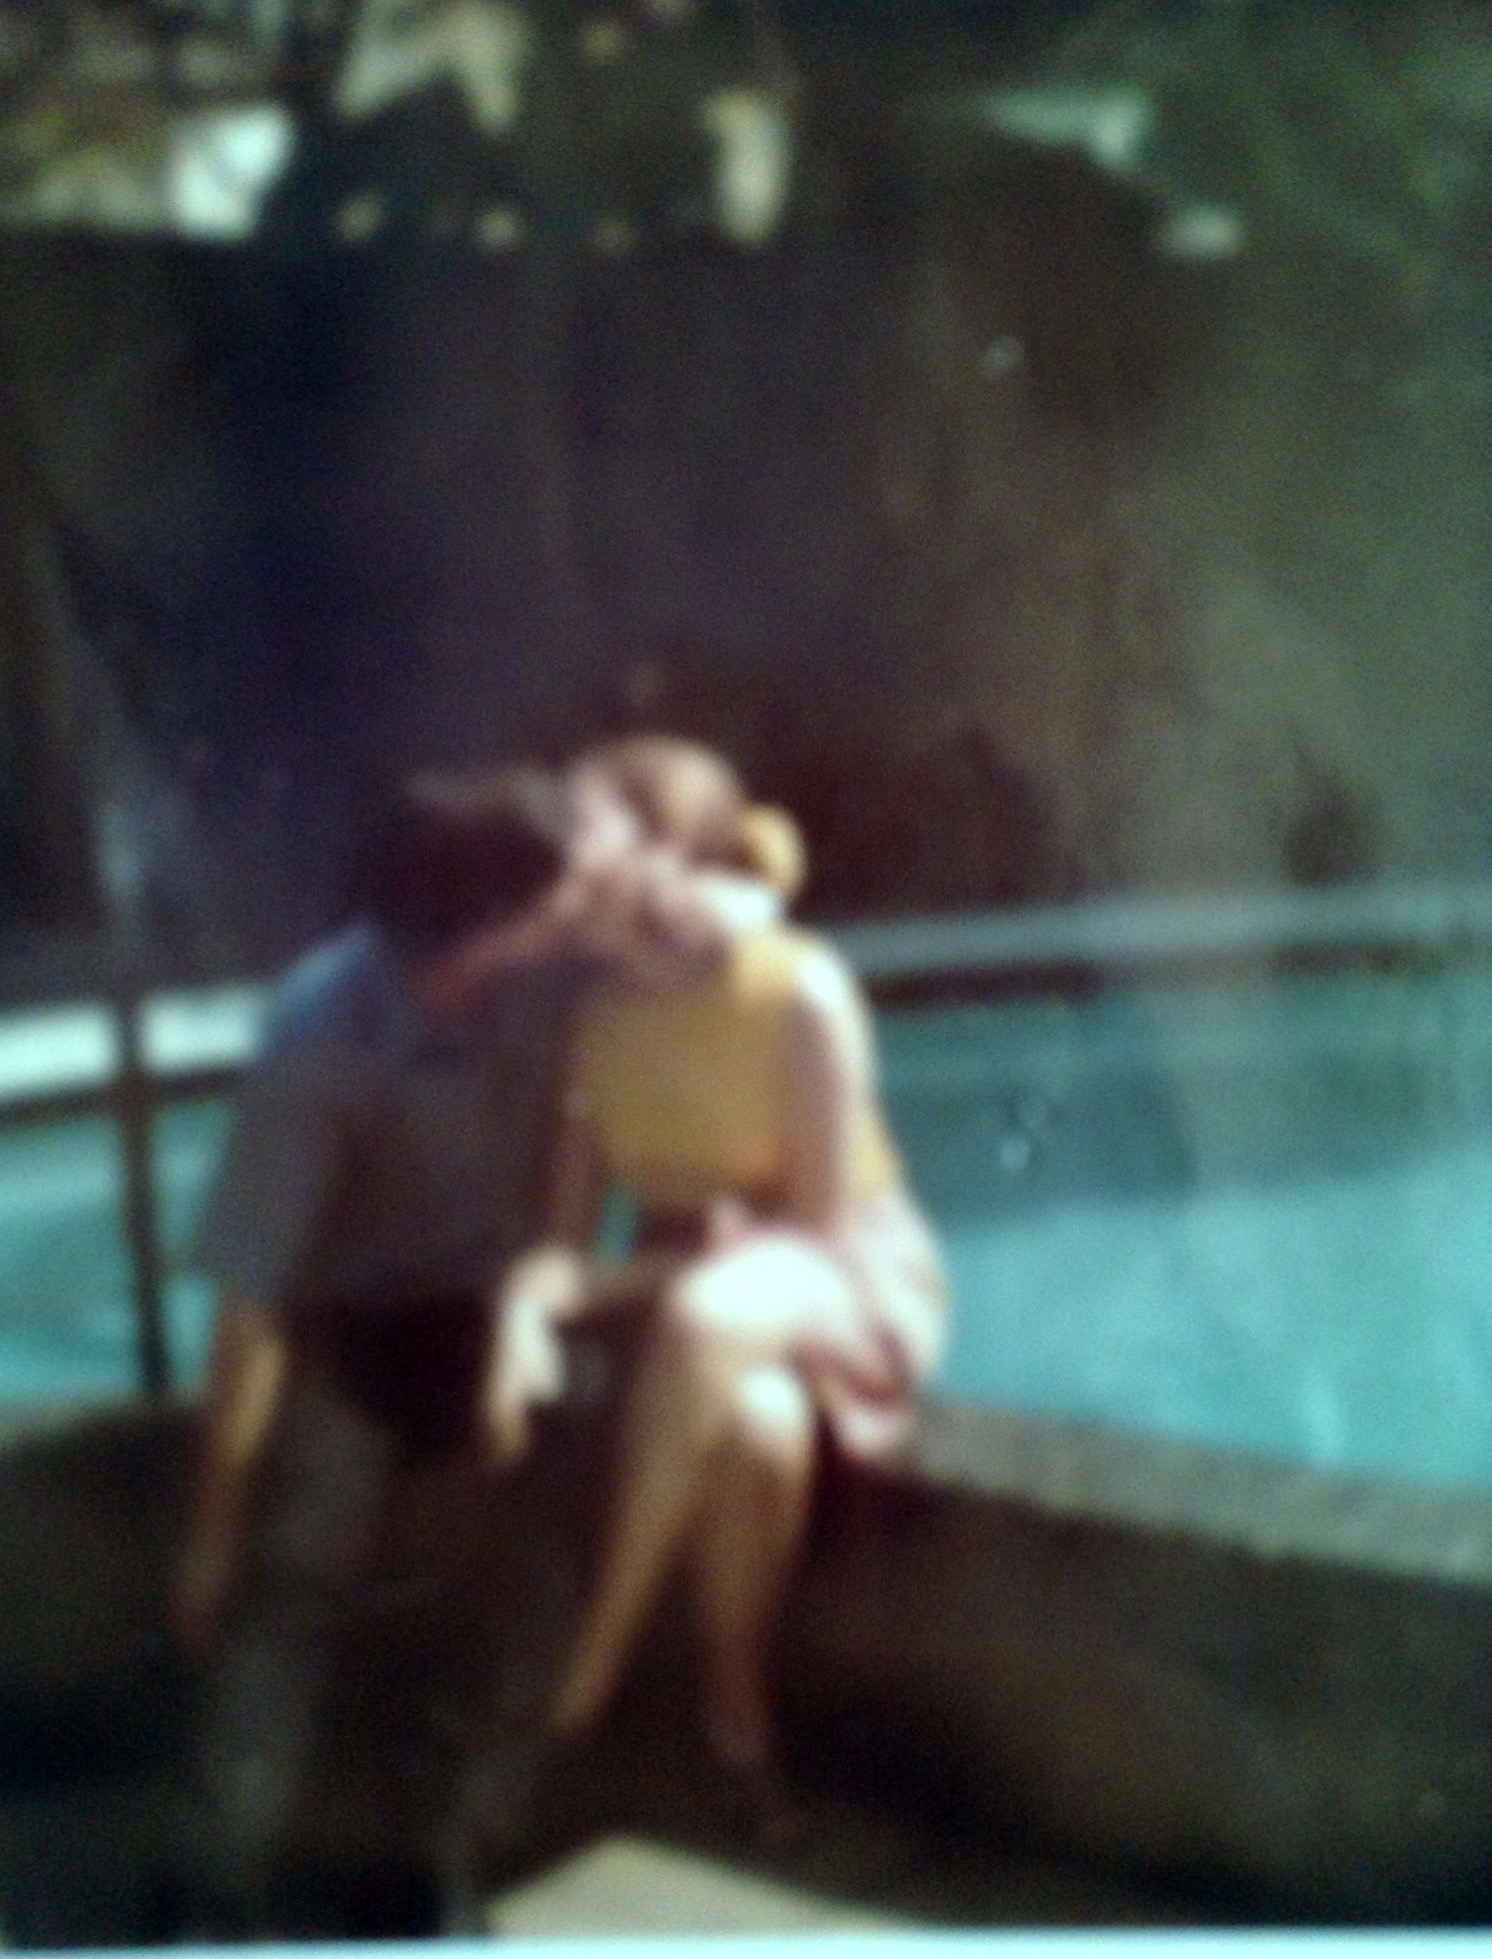 1964 começo de namoro CÉLIA e OSVALDO.